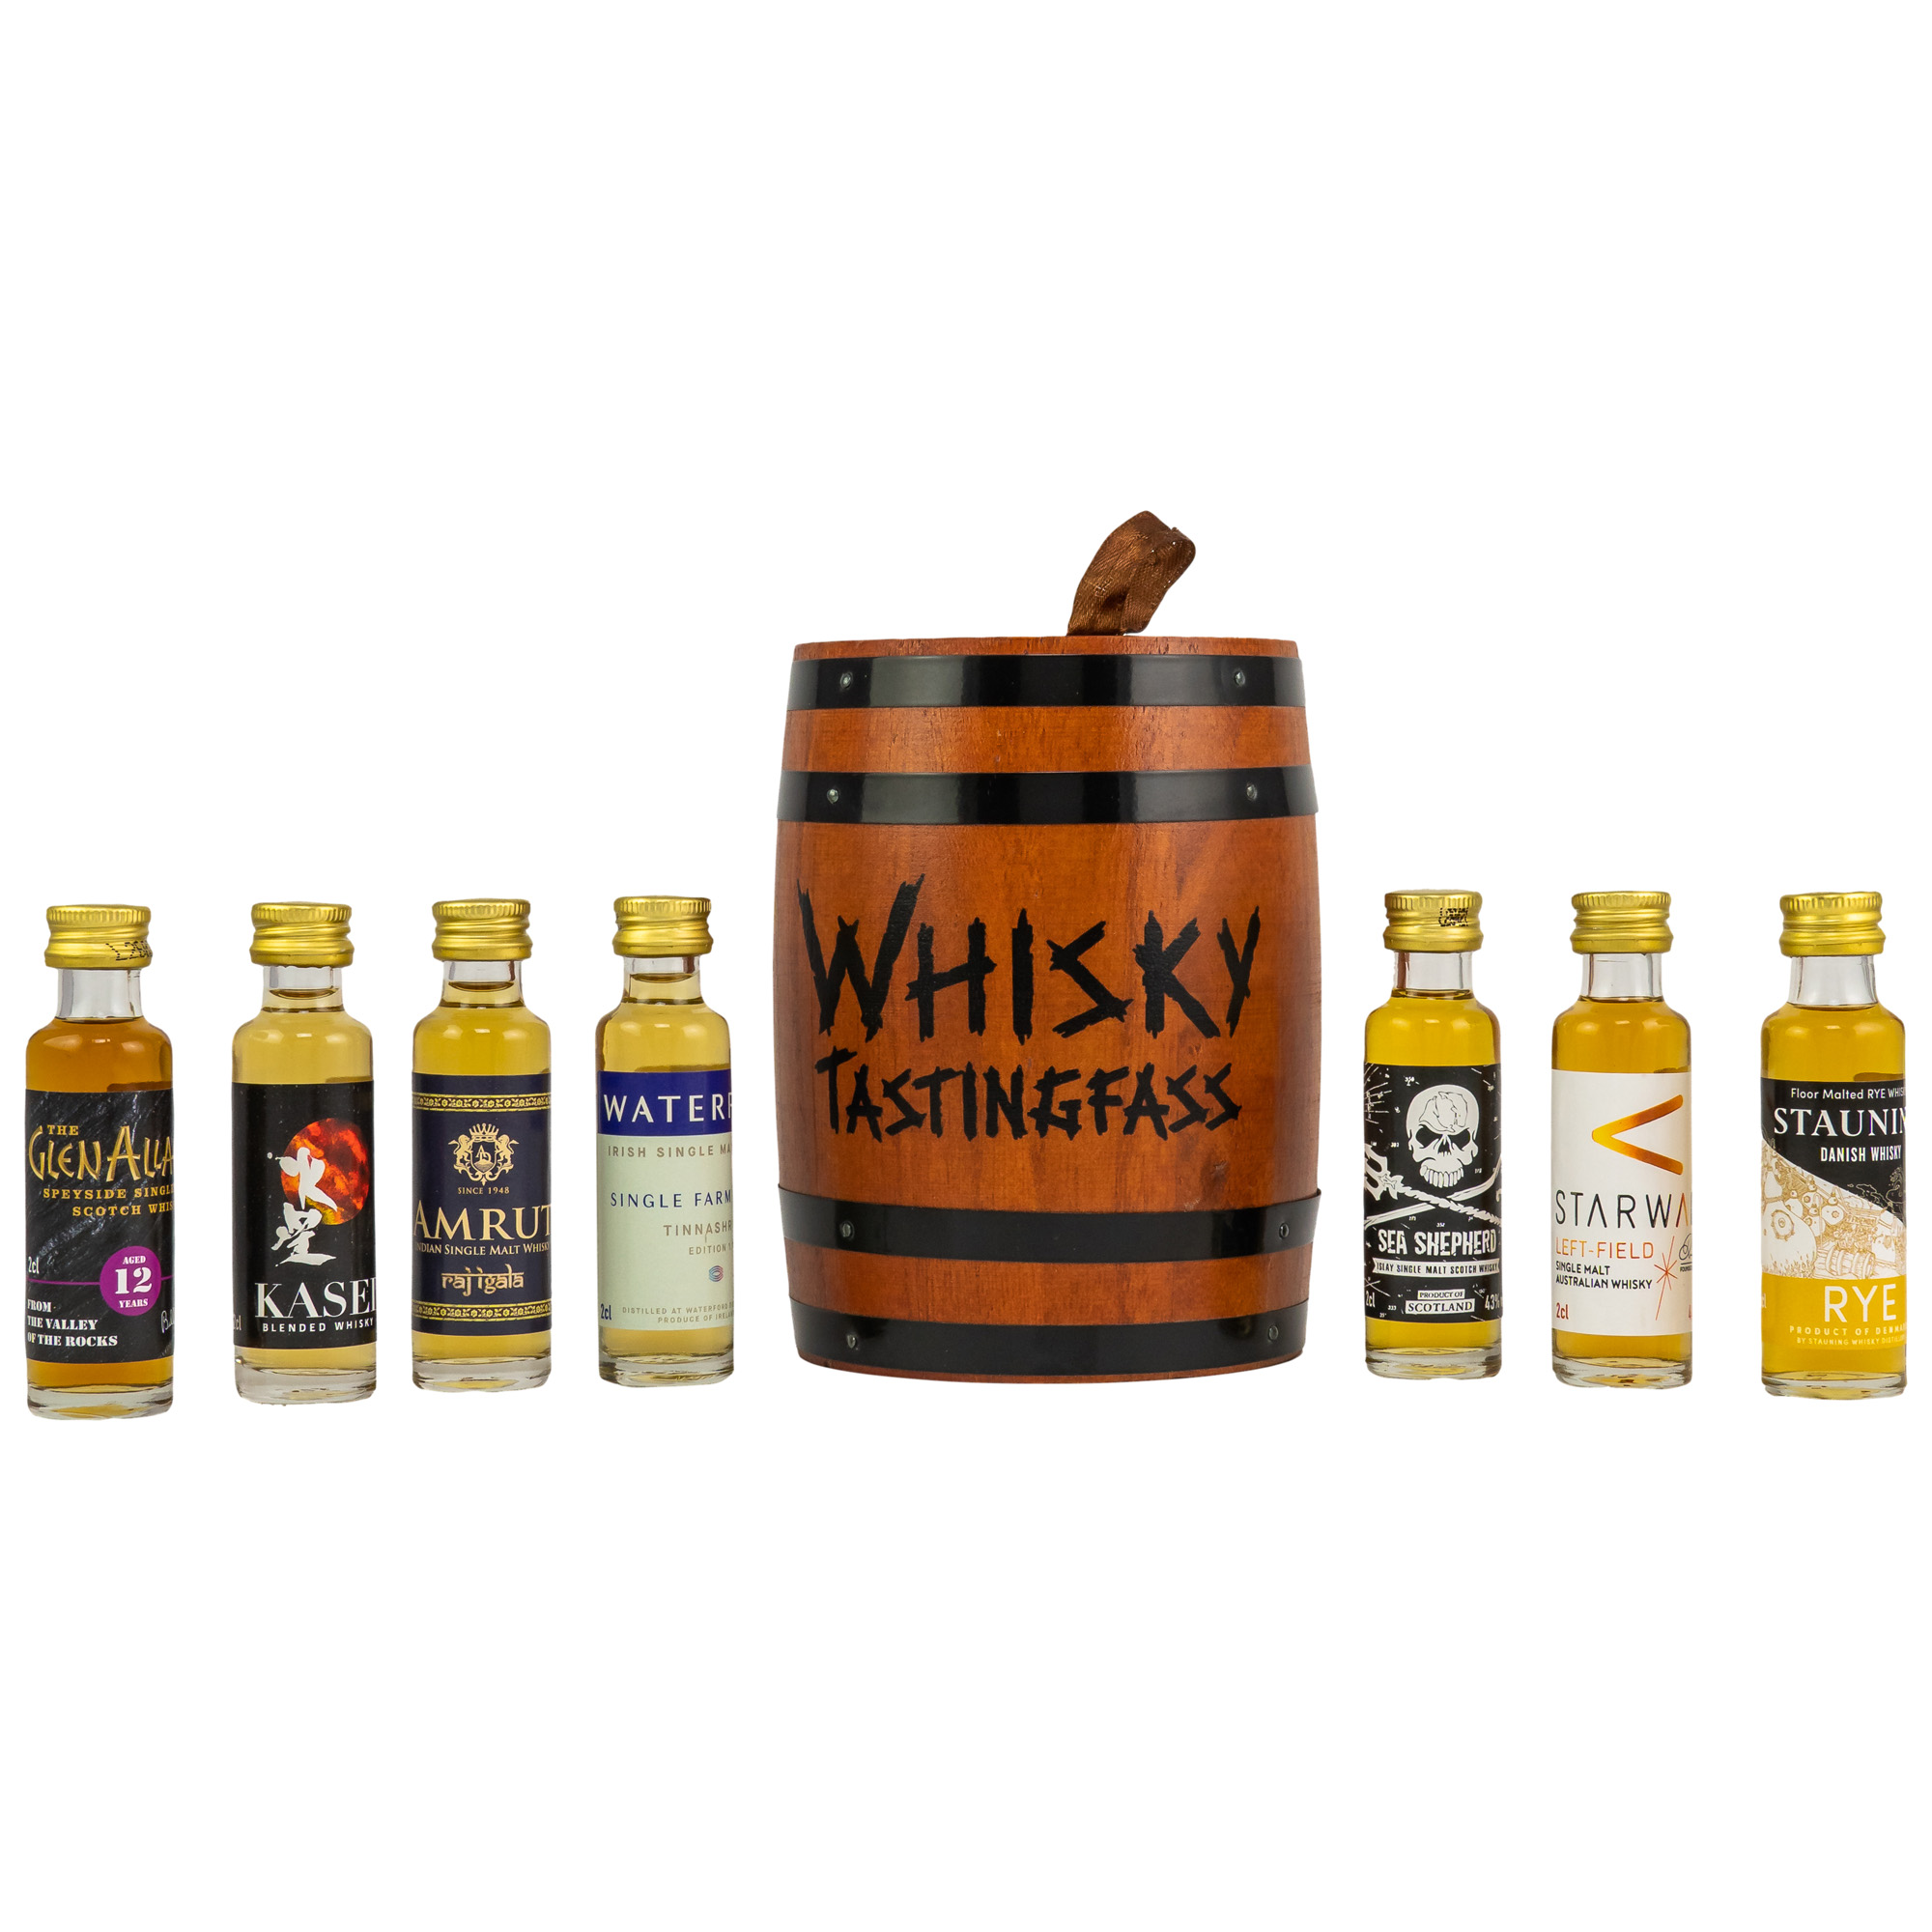 Whisky Tasting Fass / Inhalt: 7 x 20 ml. /  / 43.9%